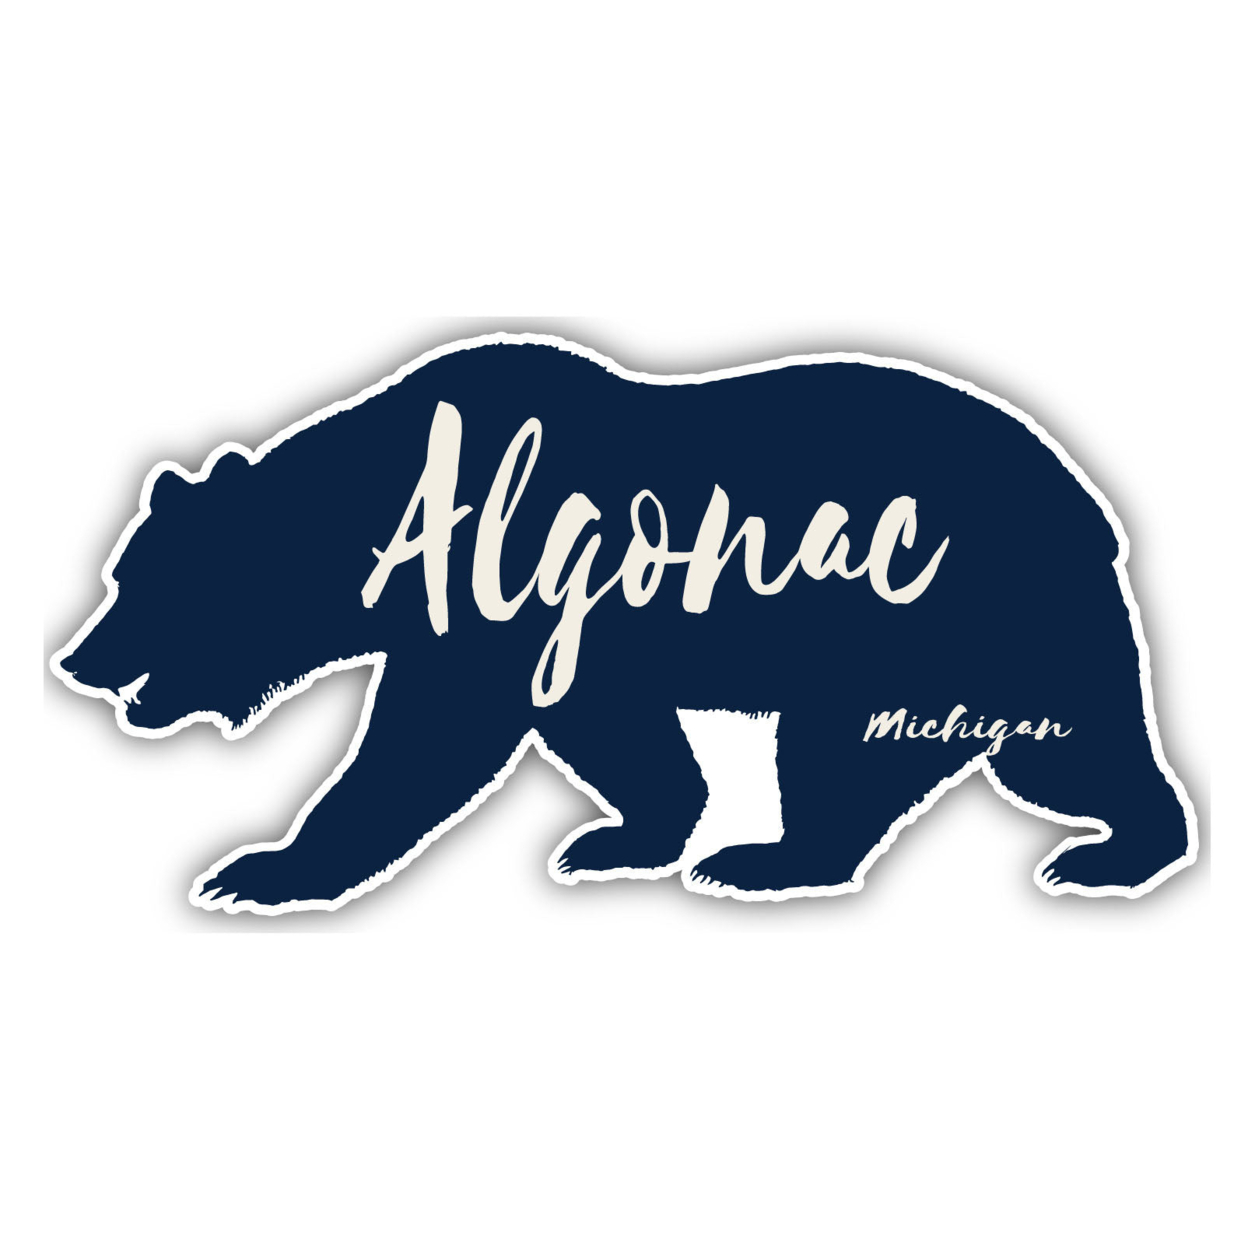 Algonac Michigan Souvenir Decorative Stickers (Choose Theme And Size) - Single Unit, 4-Inch, Bear